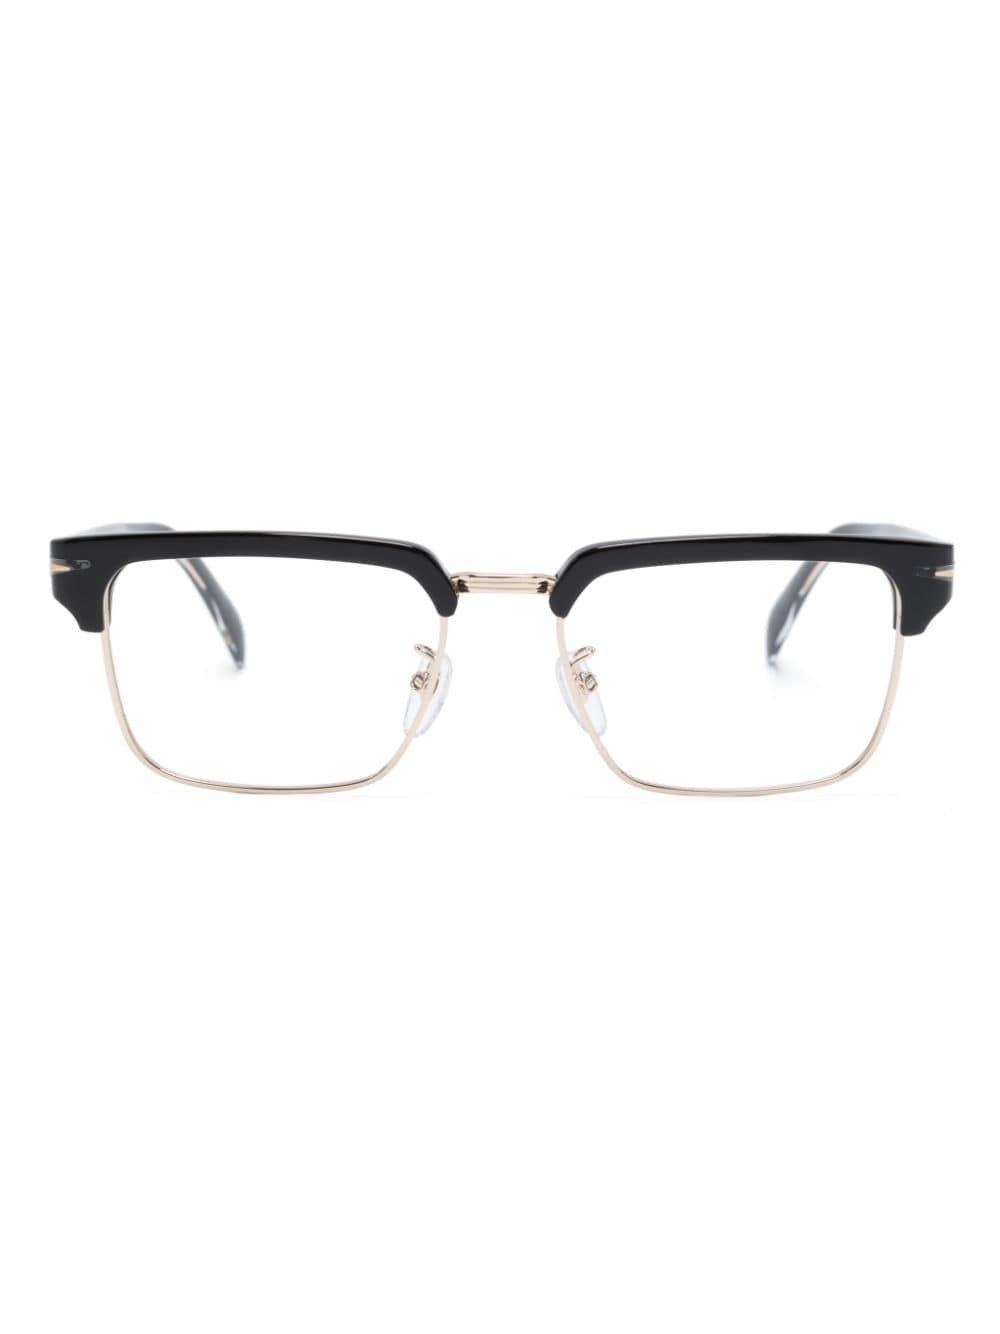 Eyewear by David Beckham polished-effect square-frame glasses - Black von Eyewear by David Beckham